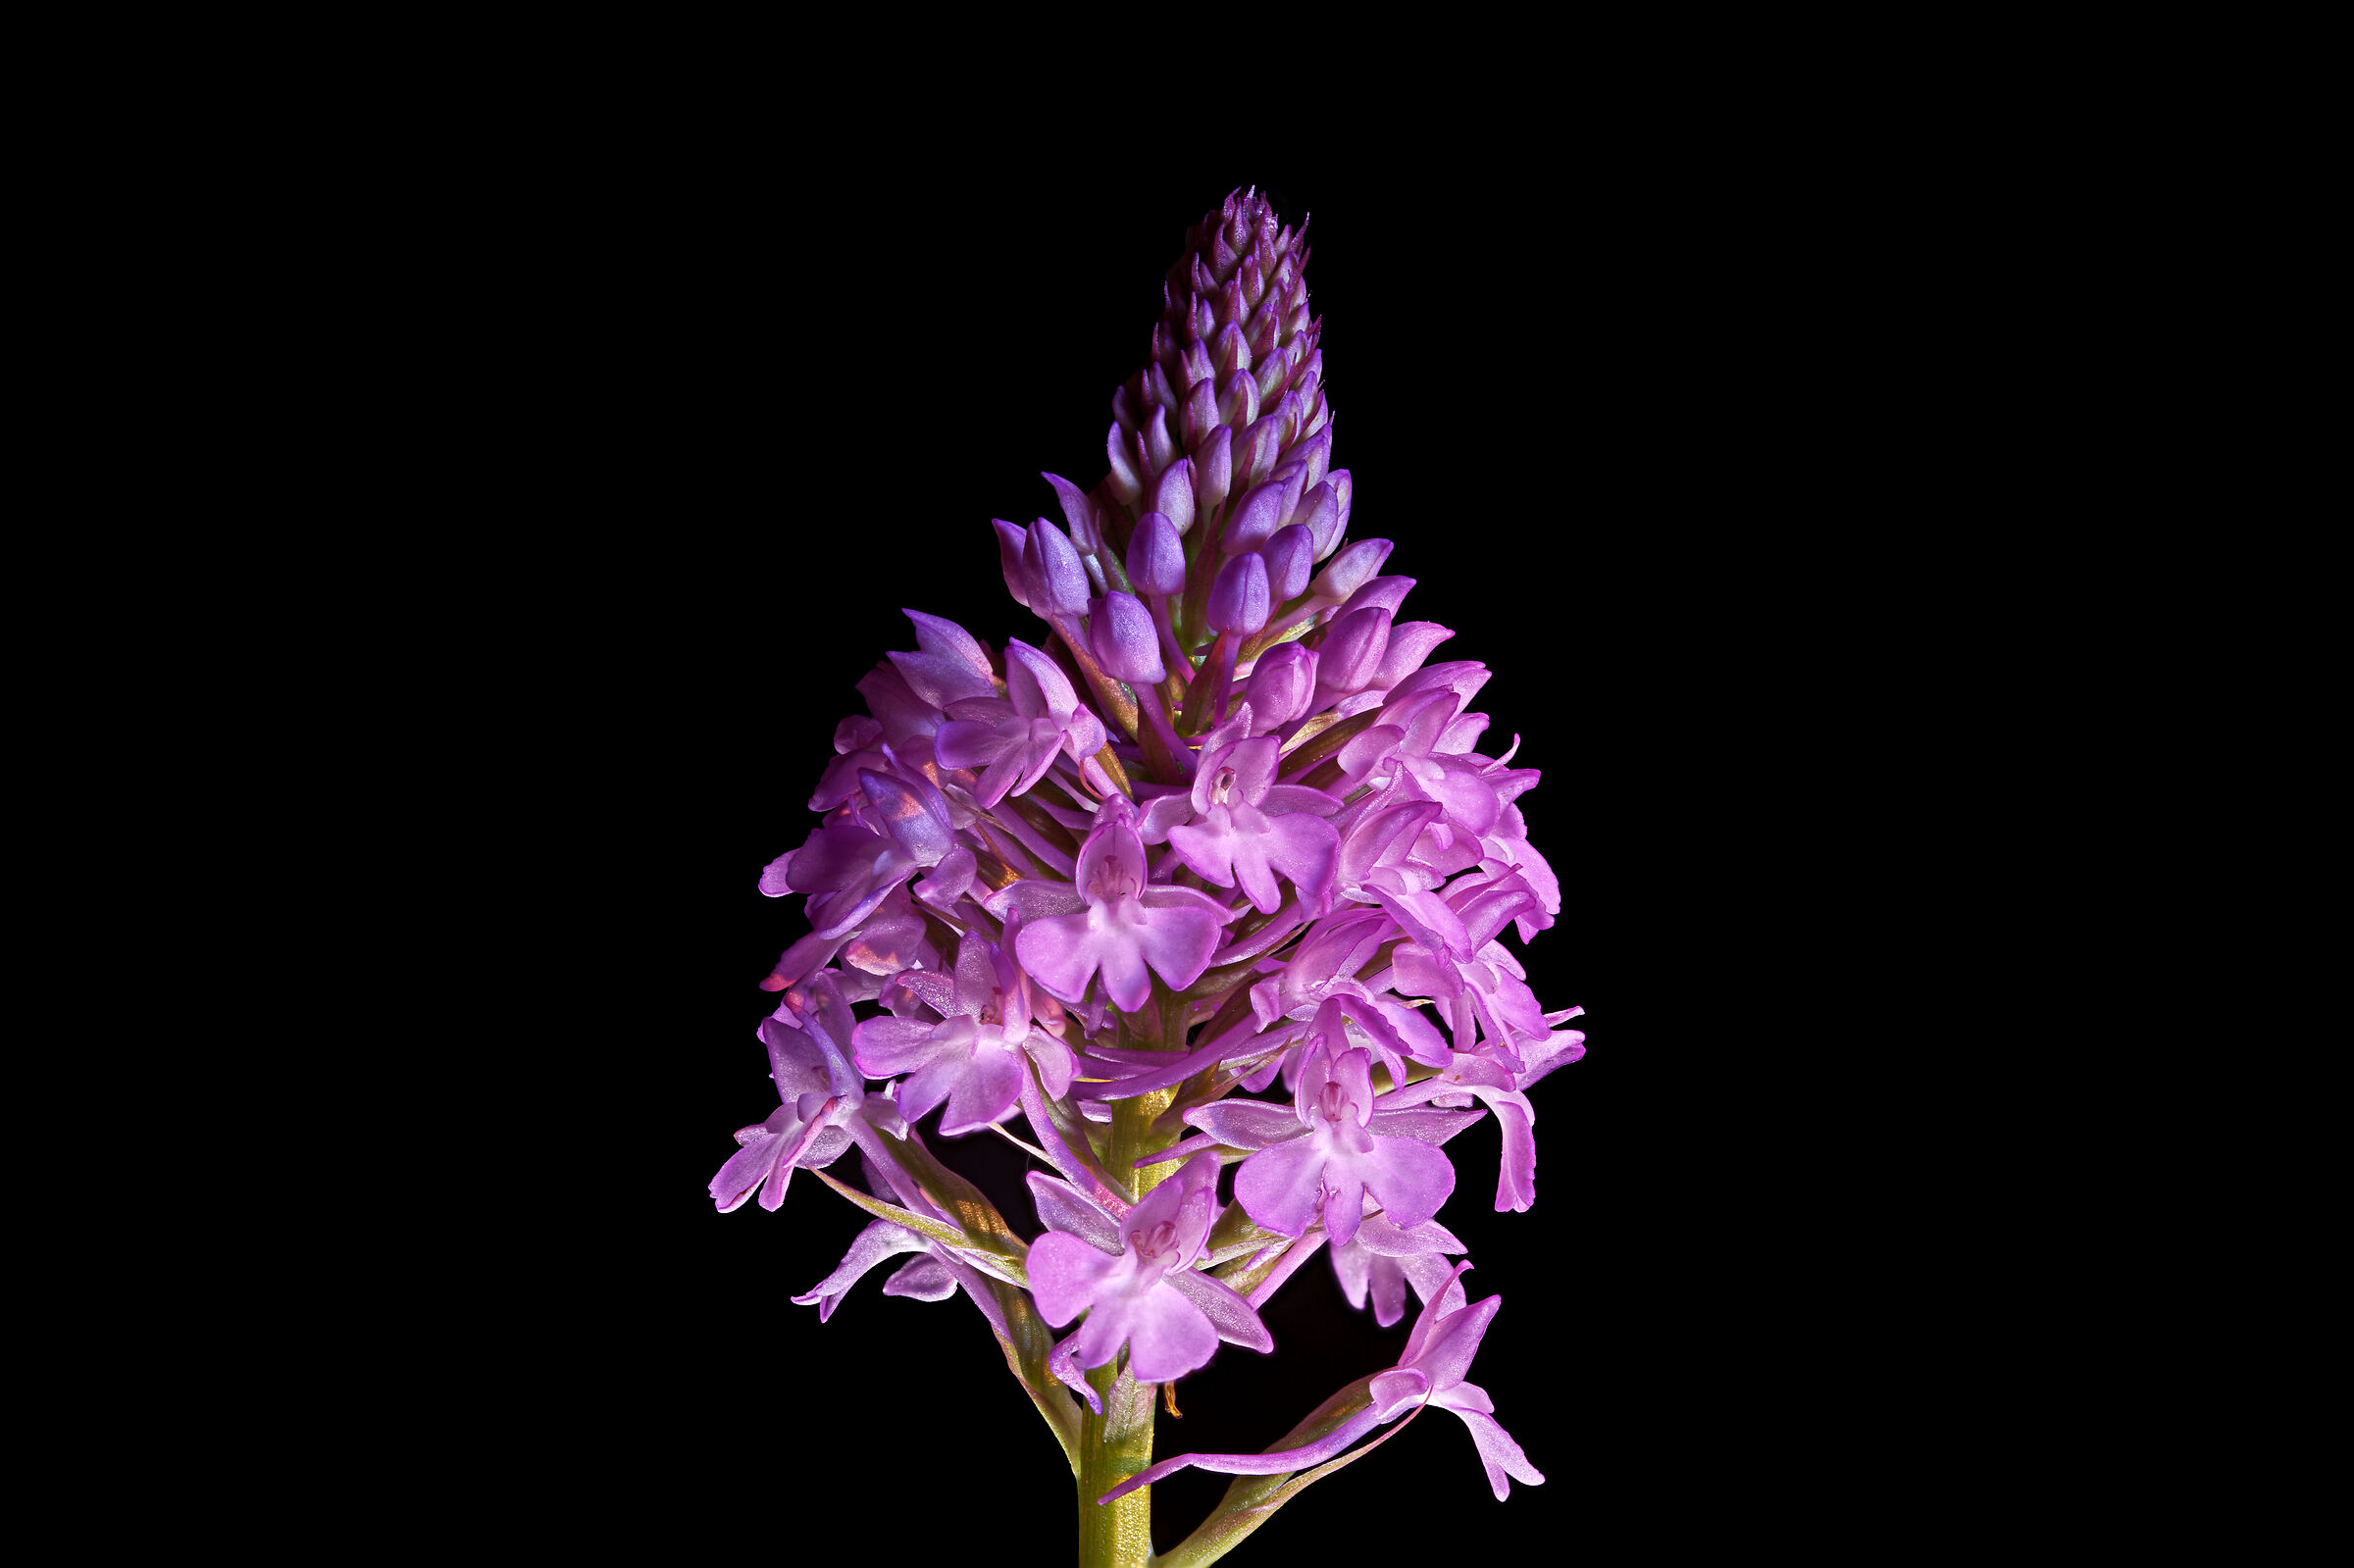 Pyramidal orchid......